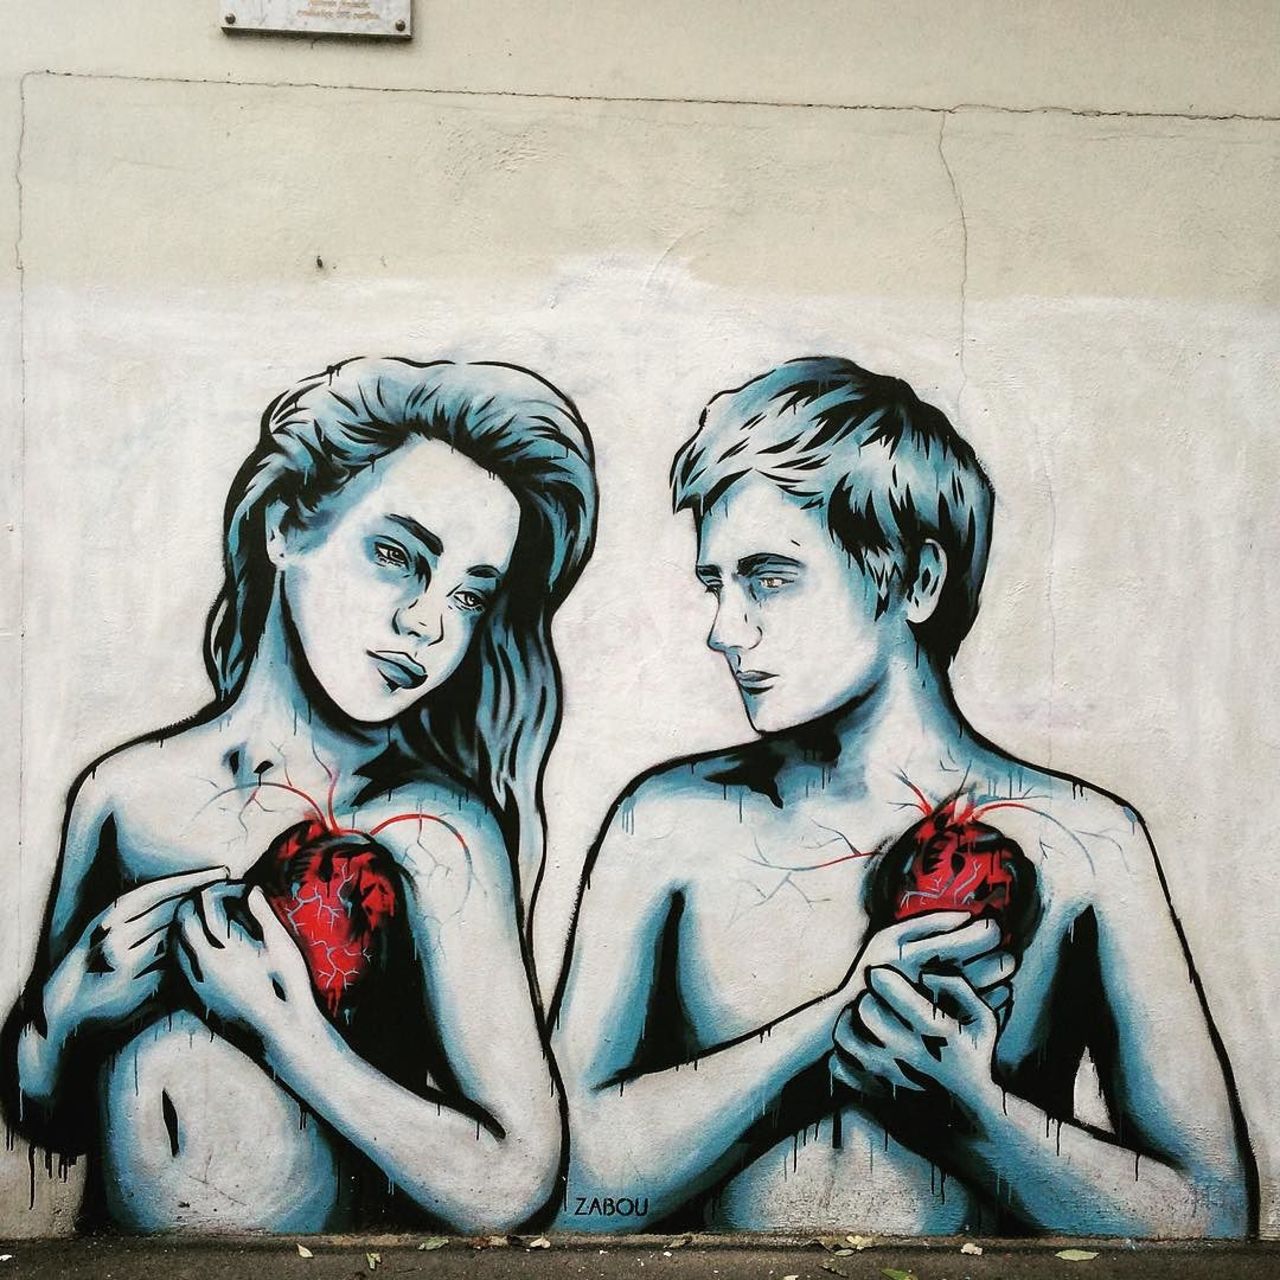 #Paris #graffiti photo by @julosteart http://ift.tt/1OQVQ8P #StreetArt https://t.co/v5loqlY89Q